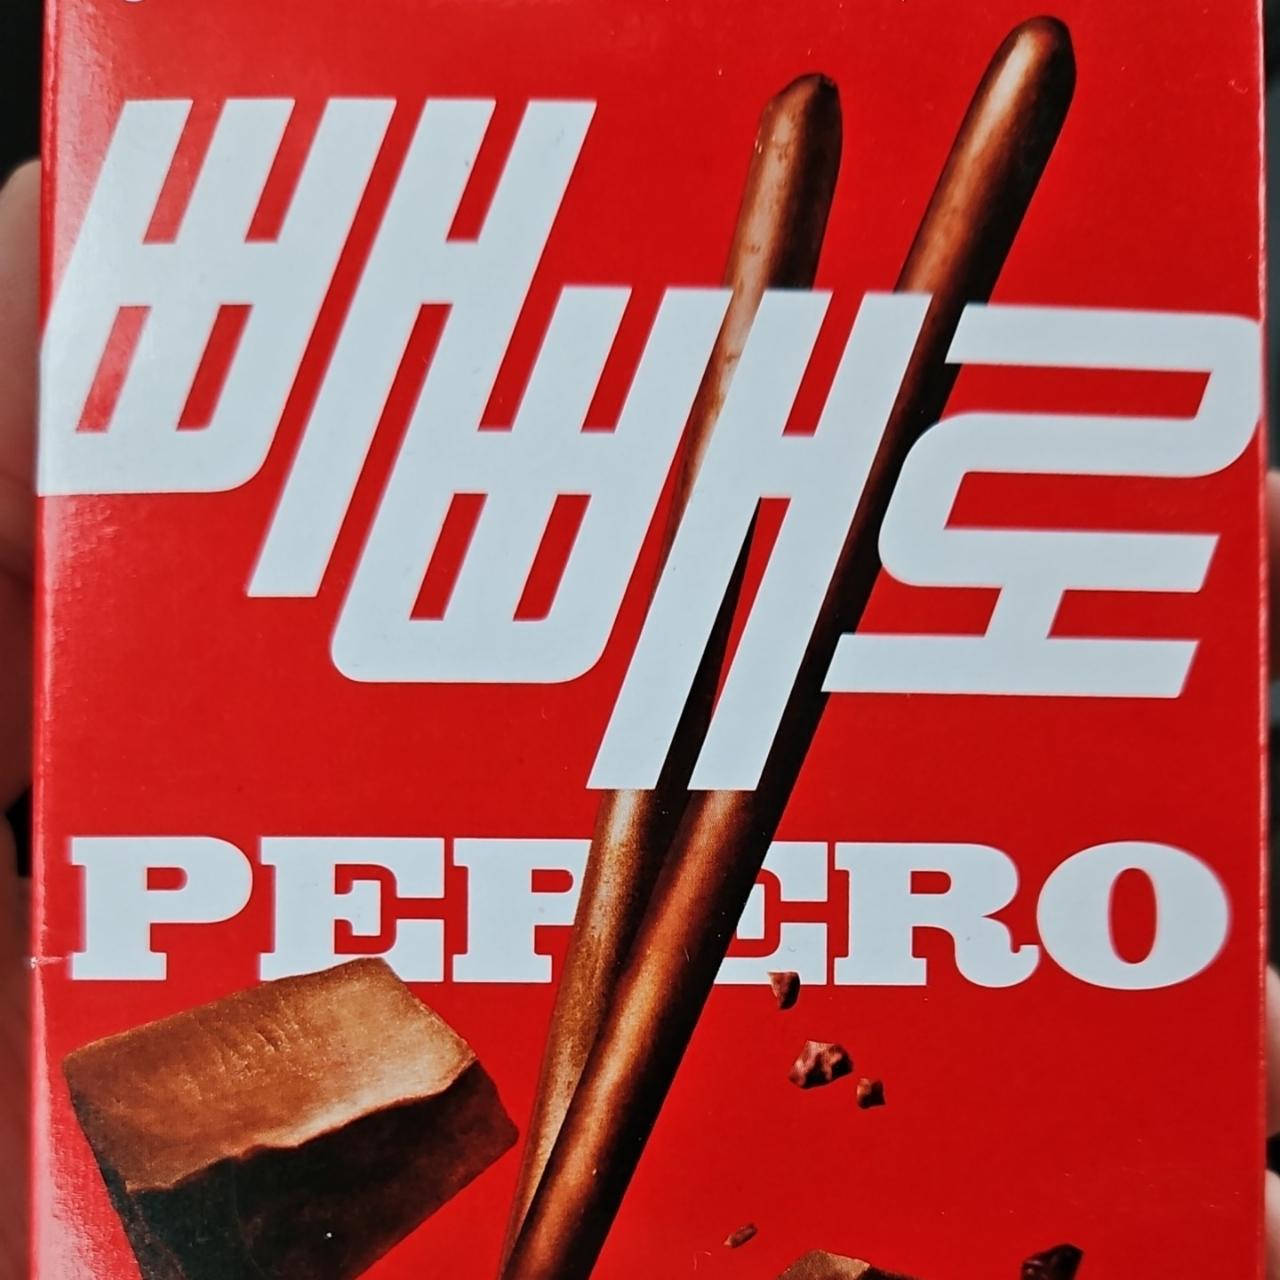 Fotografie - Pepero Original Lotte